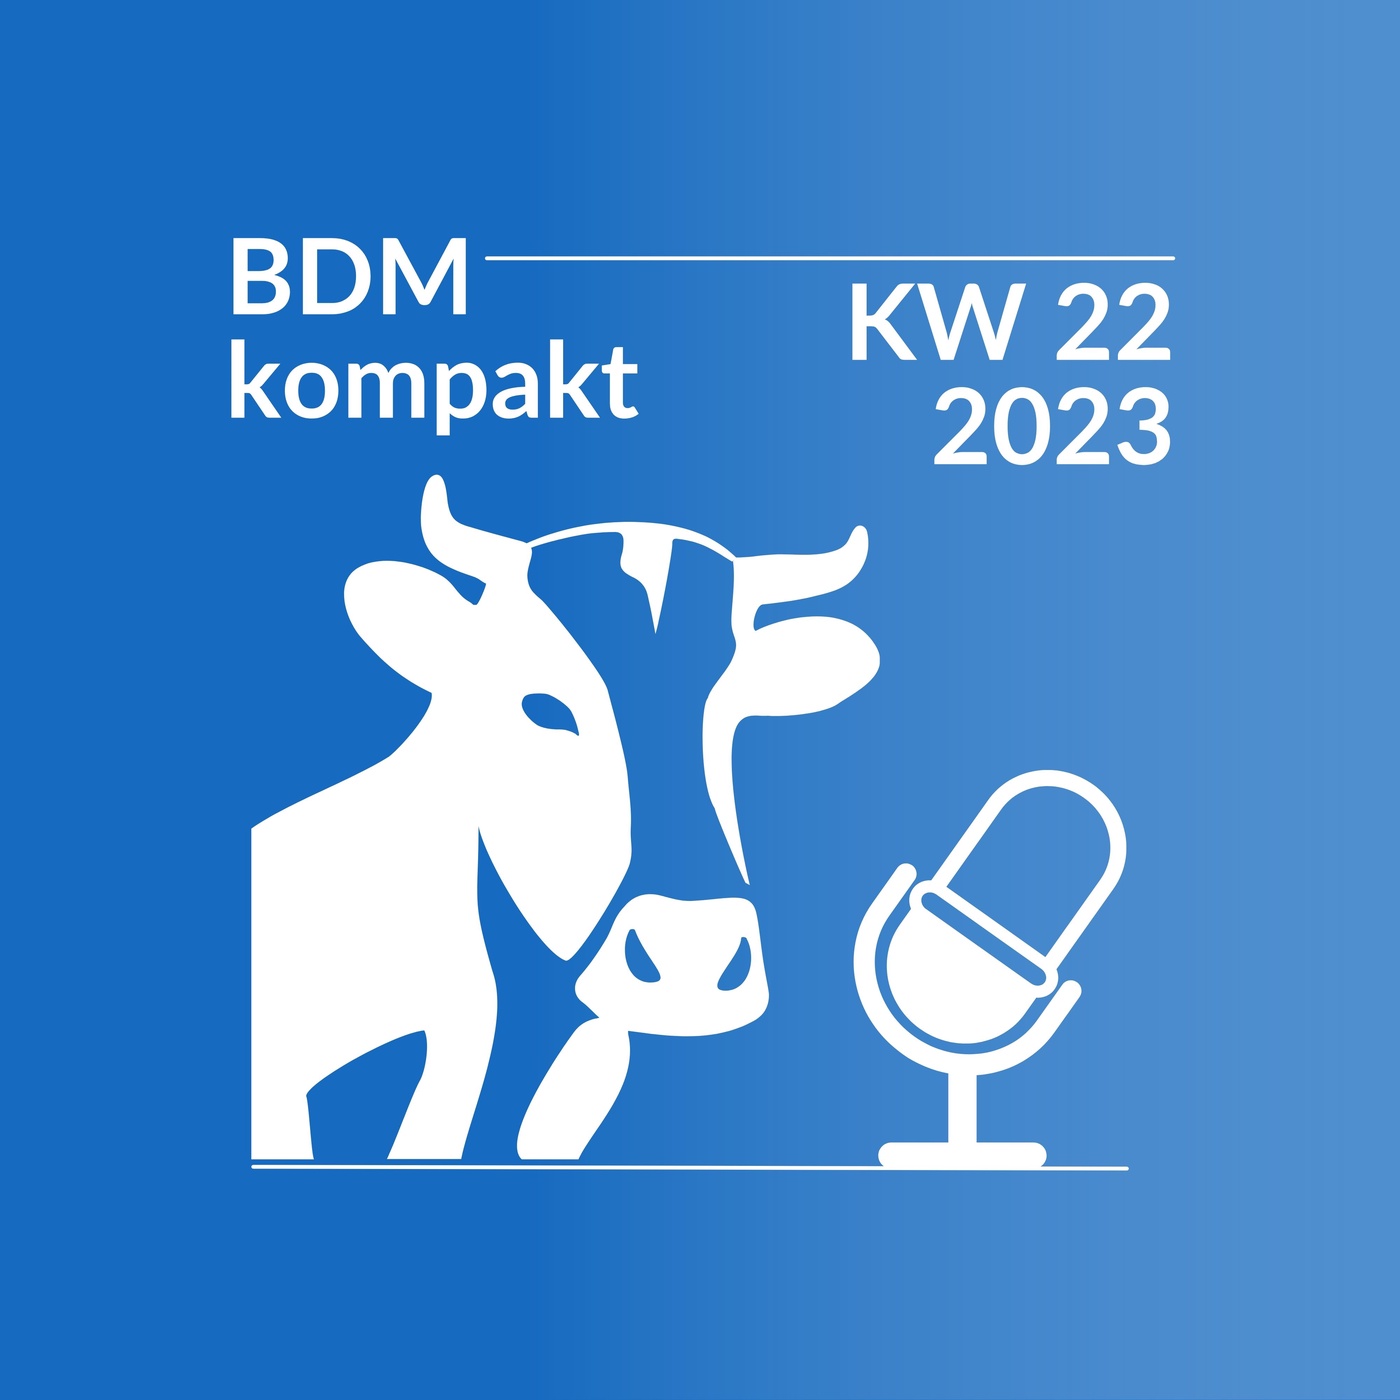 BDM kompakt KW 22/2023